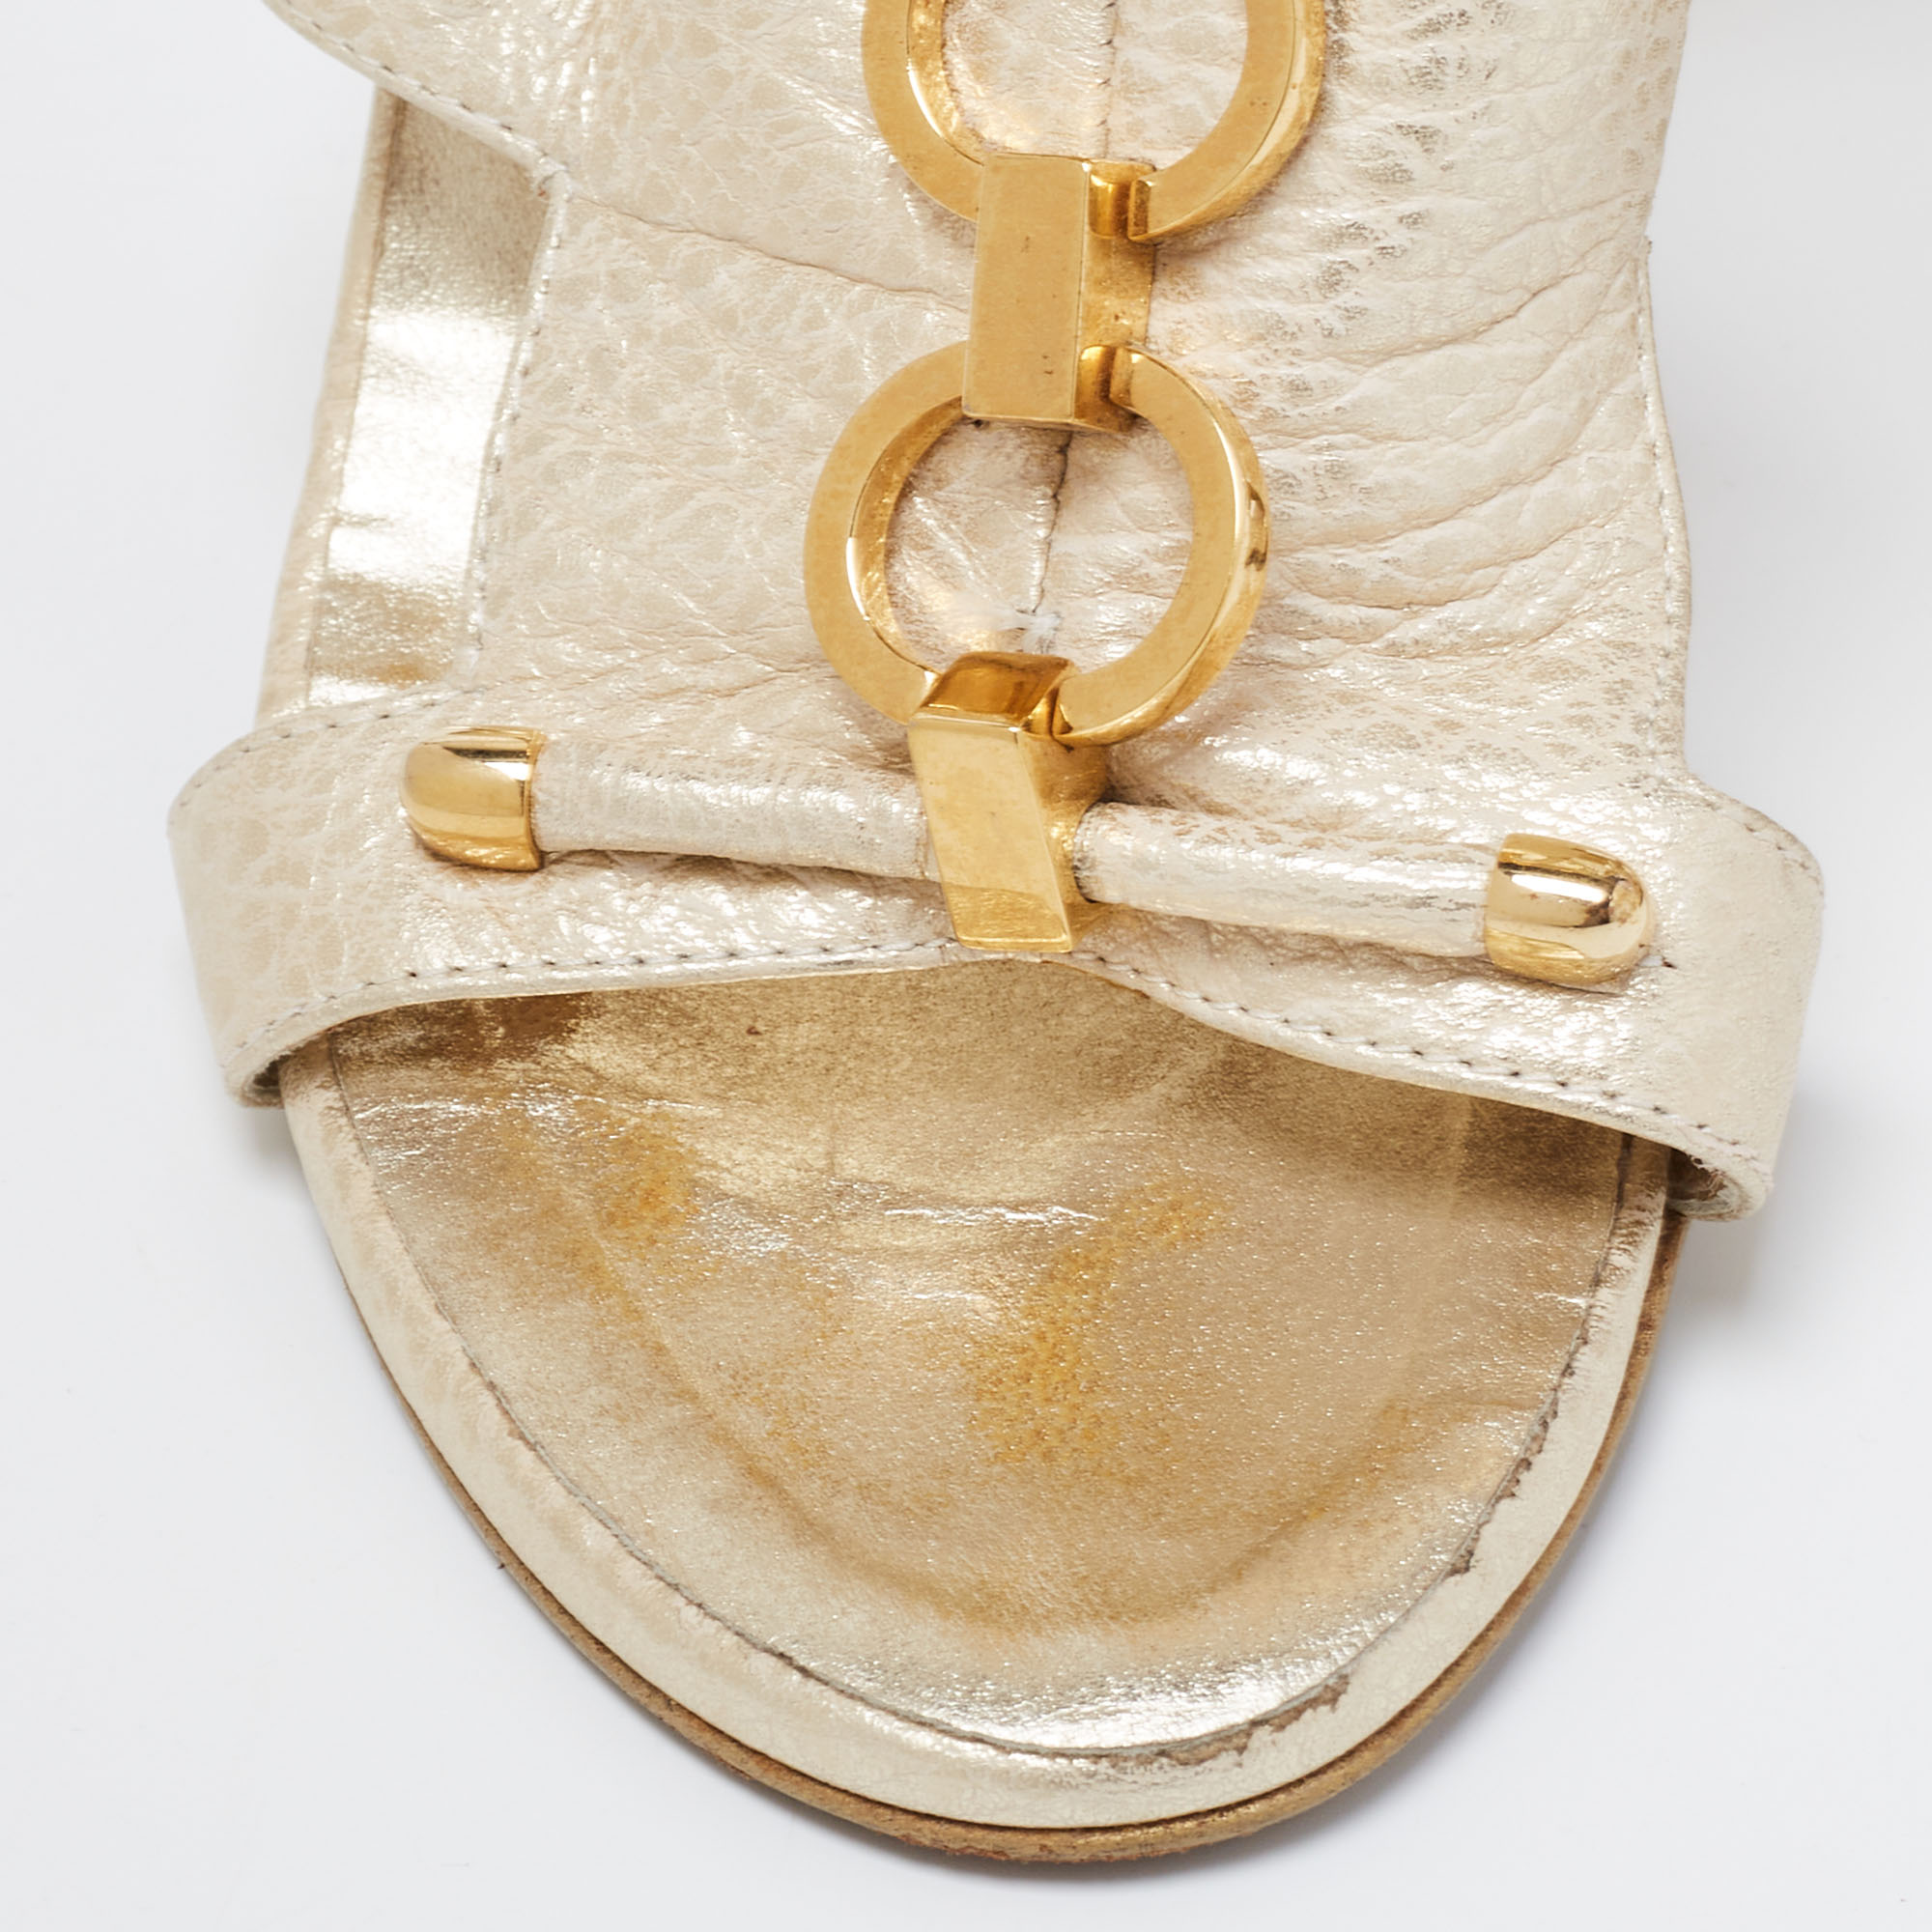 Roberto Cavalli Gold Leather Metal Embellished Ankle Strap Sandals Size 37.5